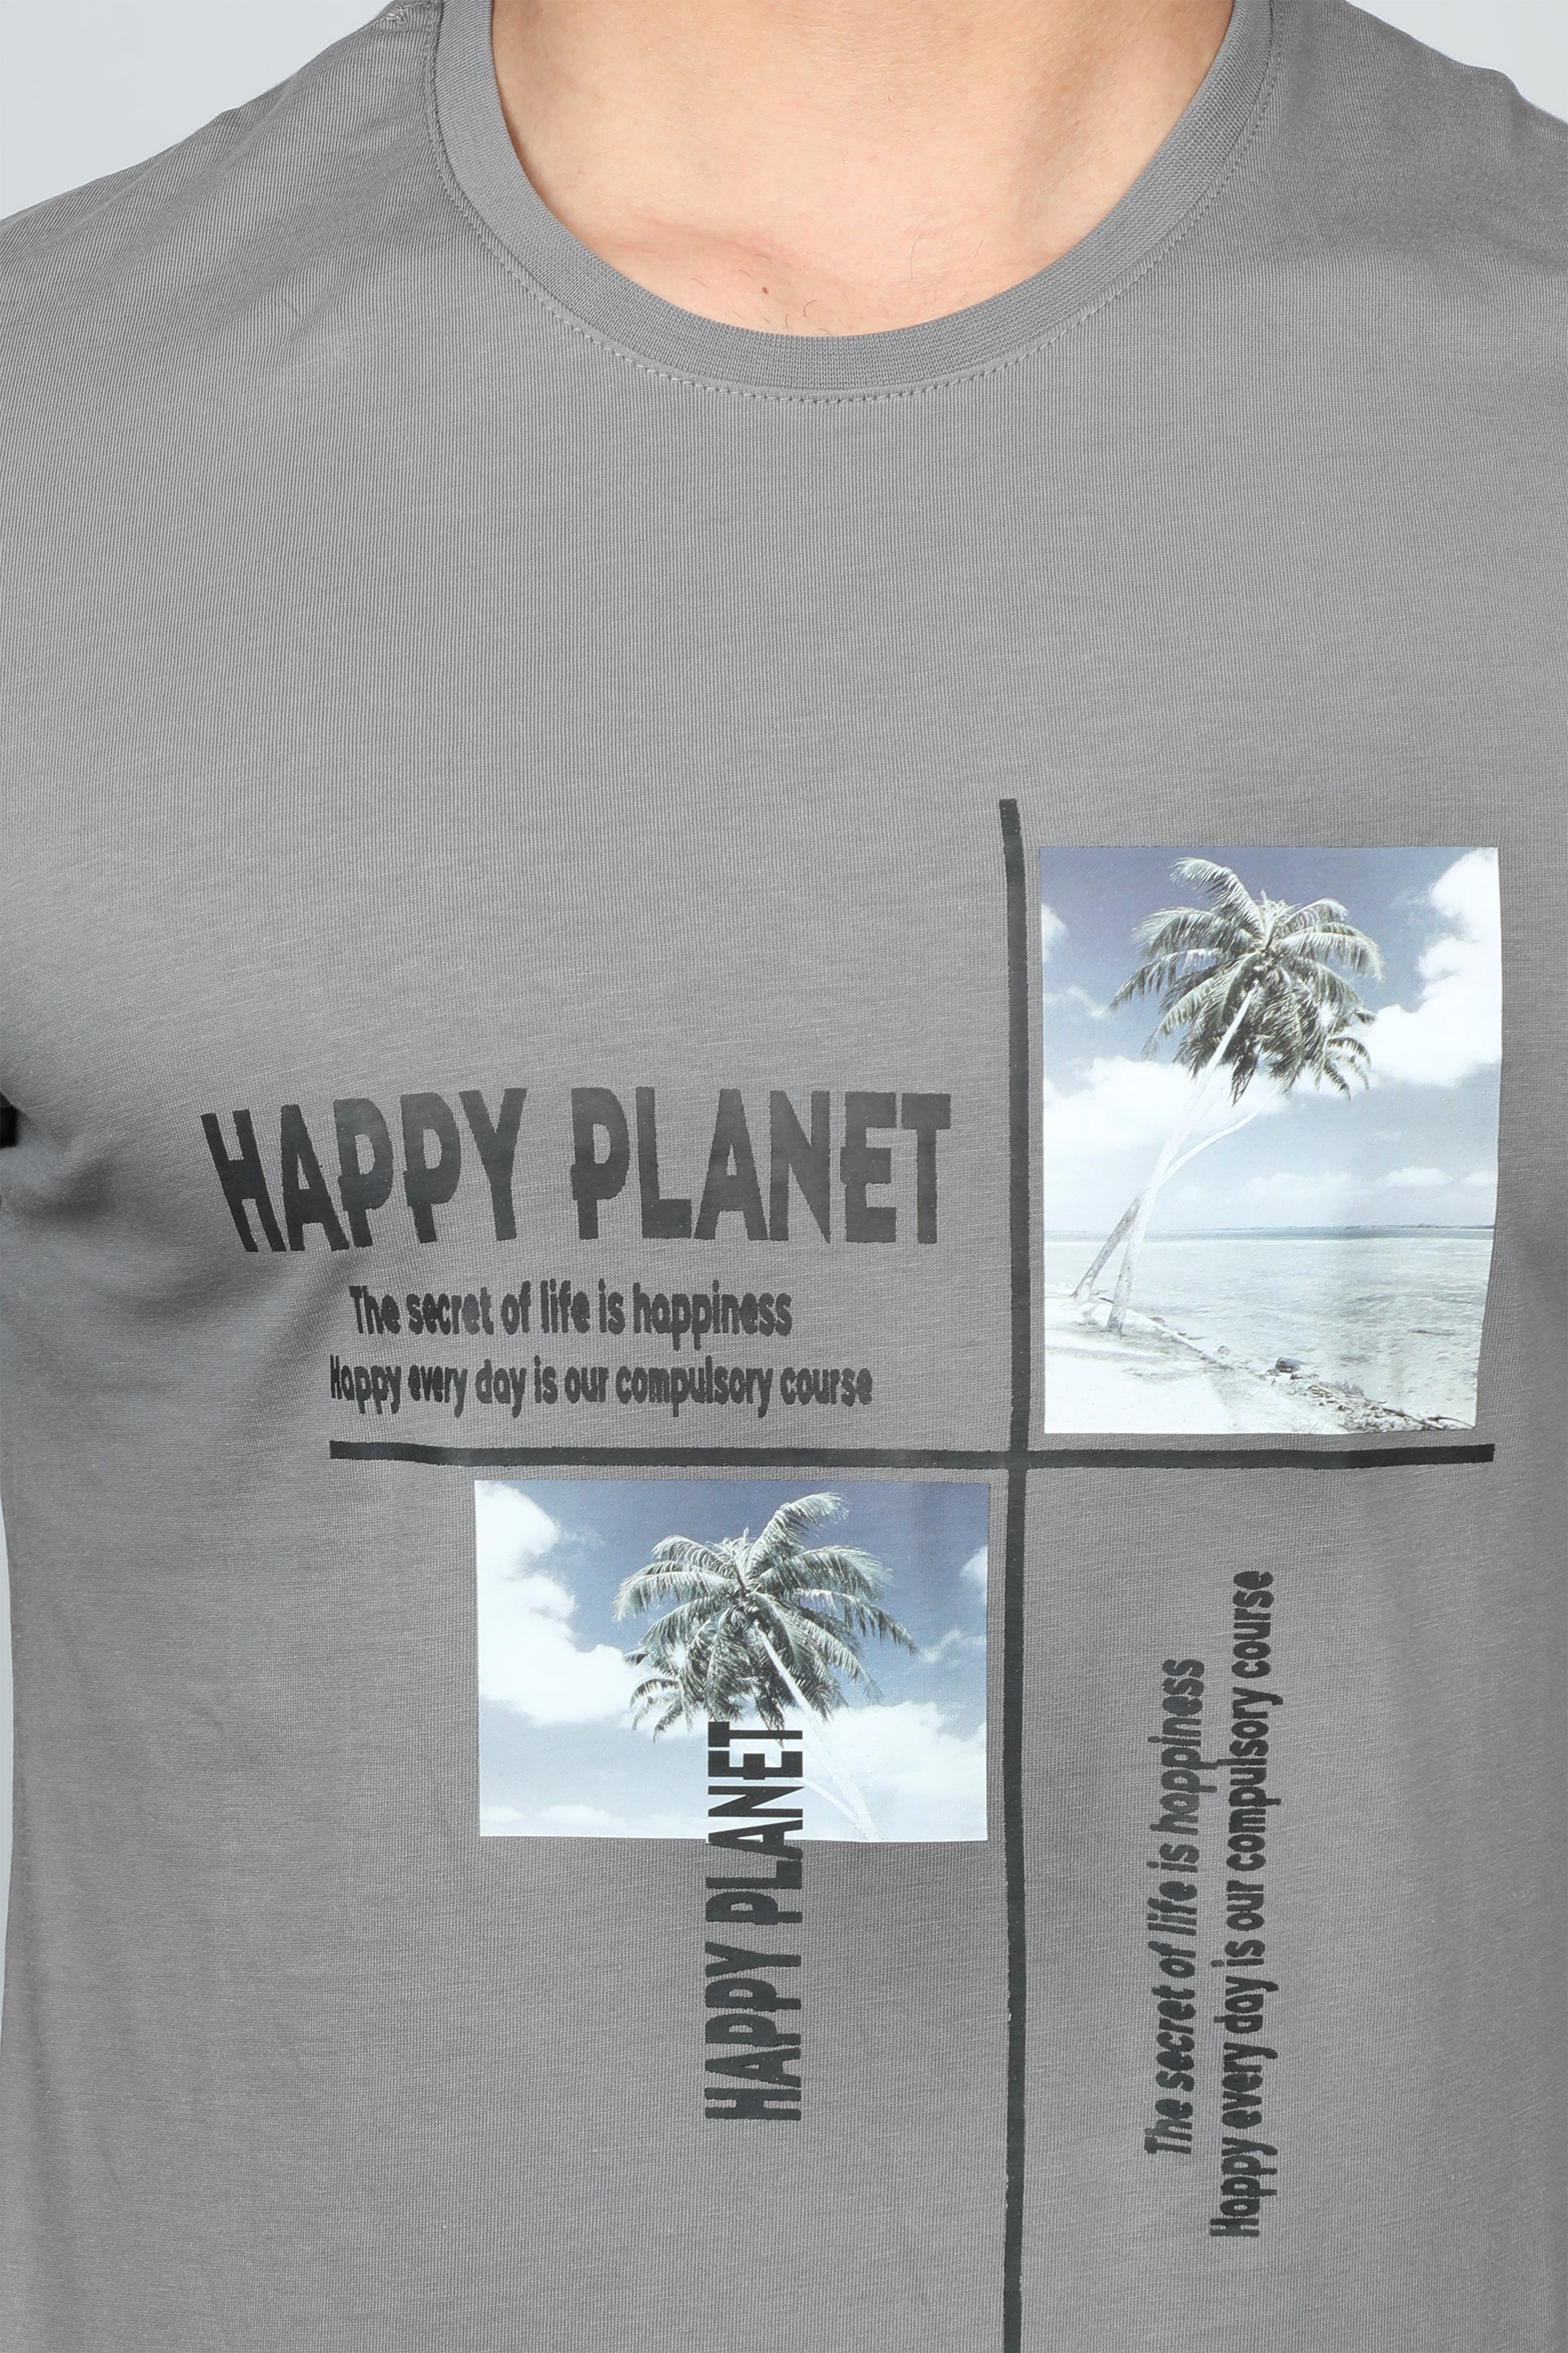 Dark Grey T-shirt With Happy Planet Front Design